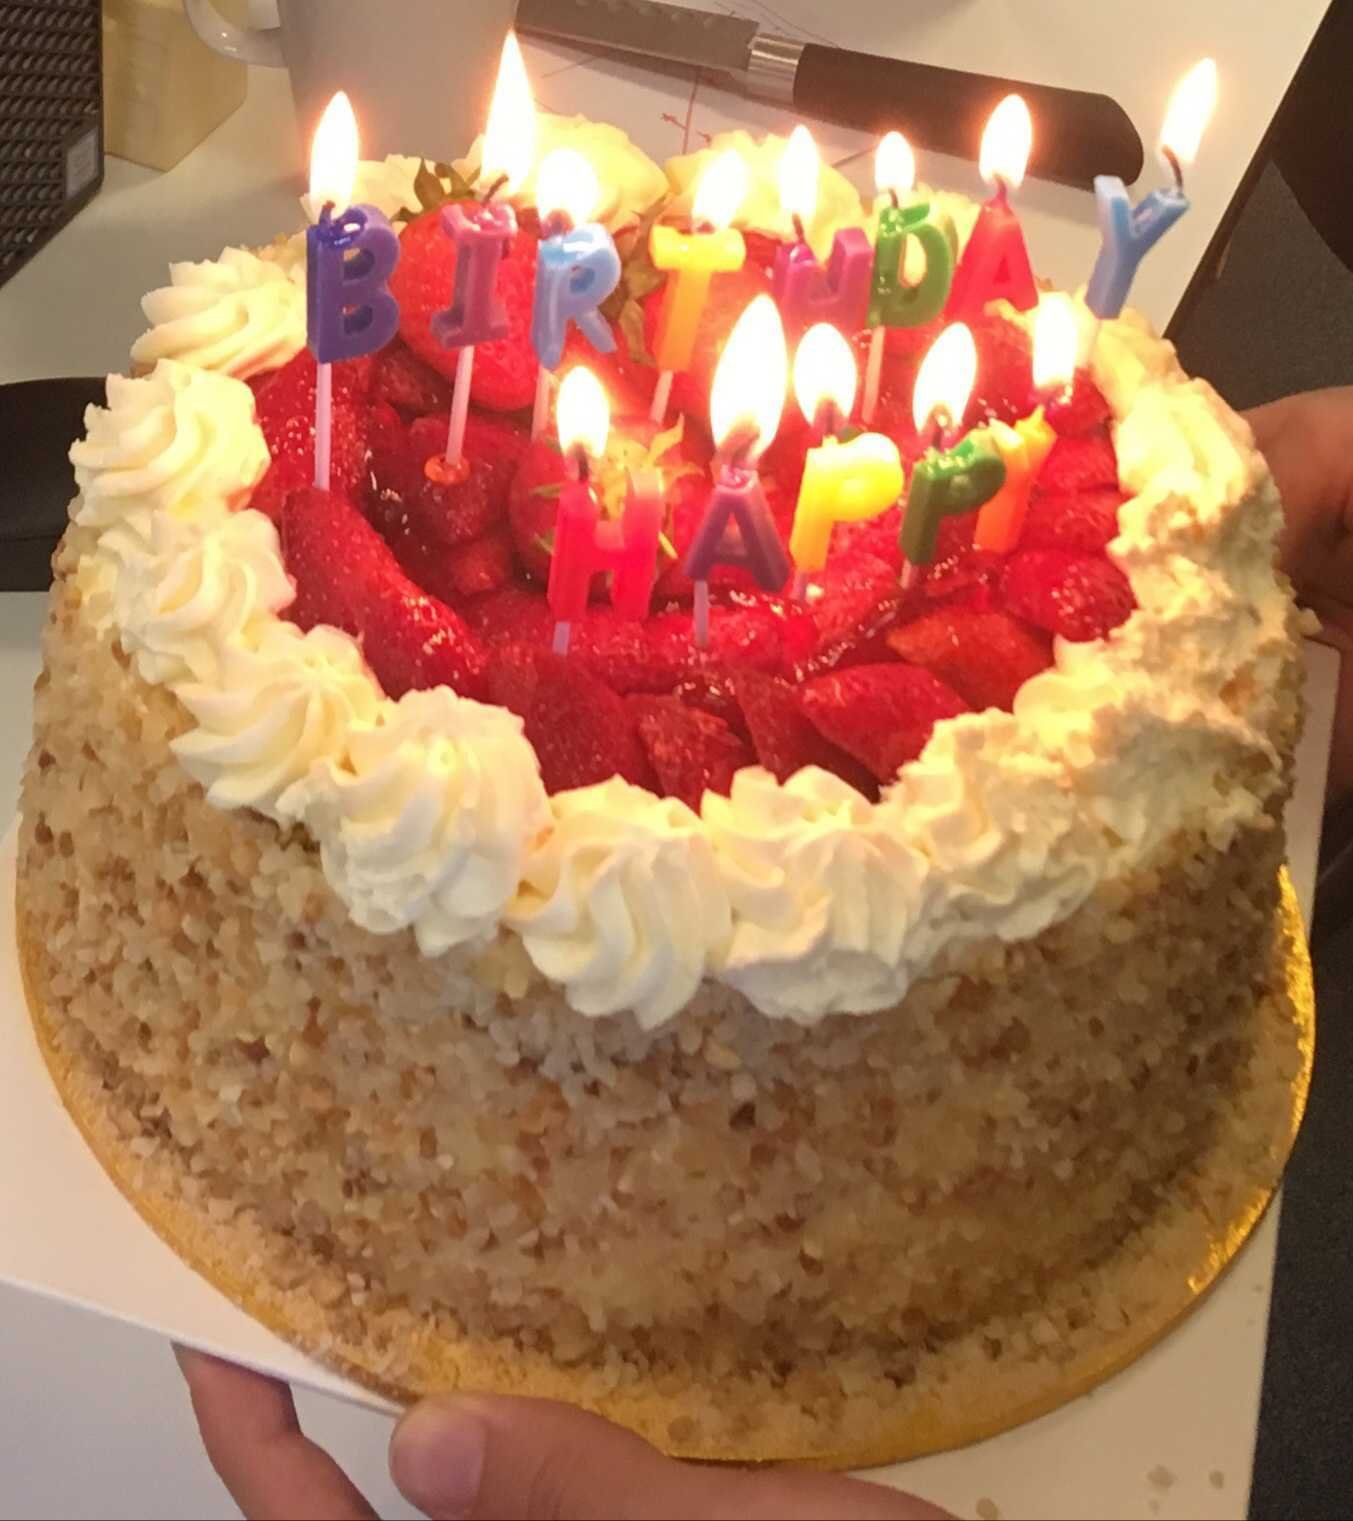 Ian's birthday cake 2019